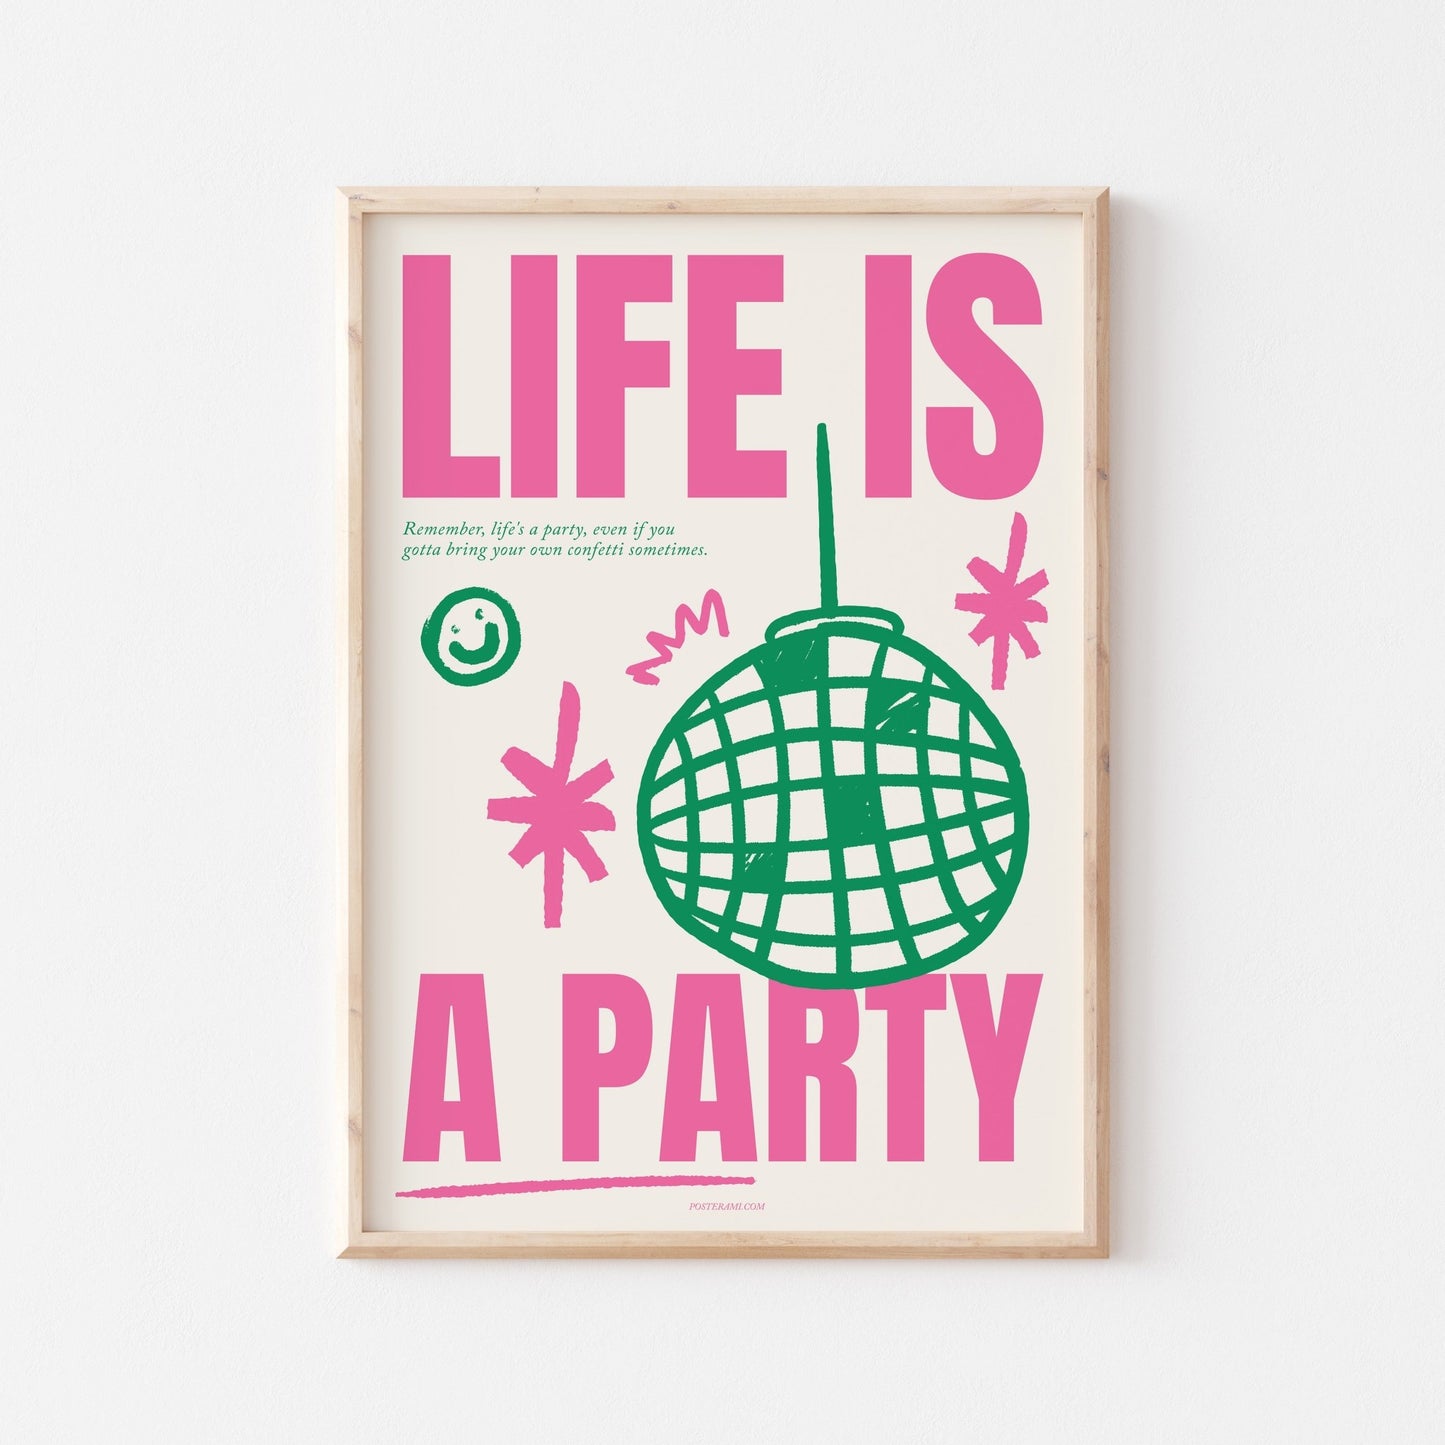 Life Is A Party Art Print - Posterami